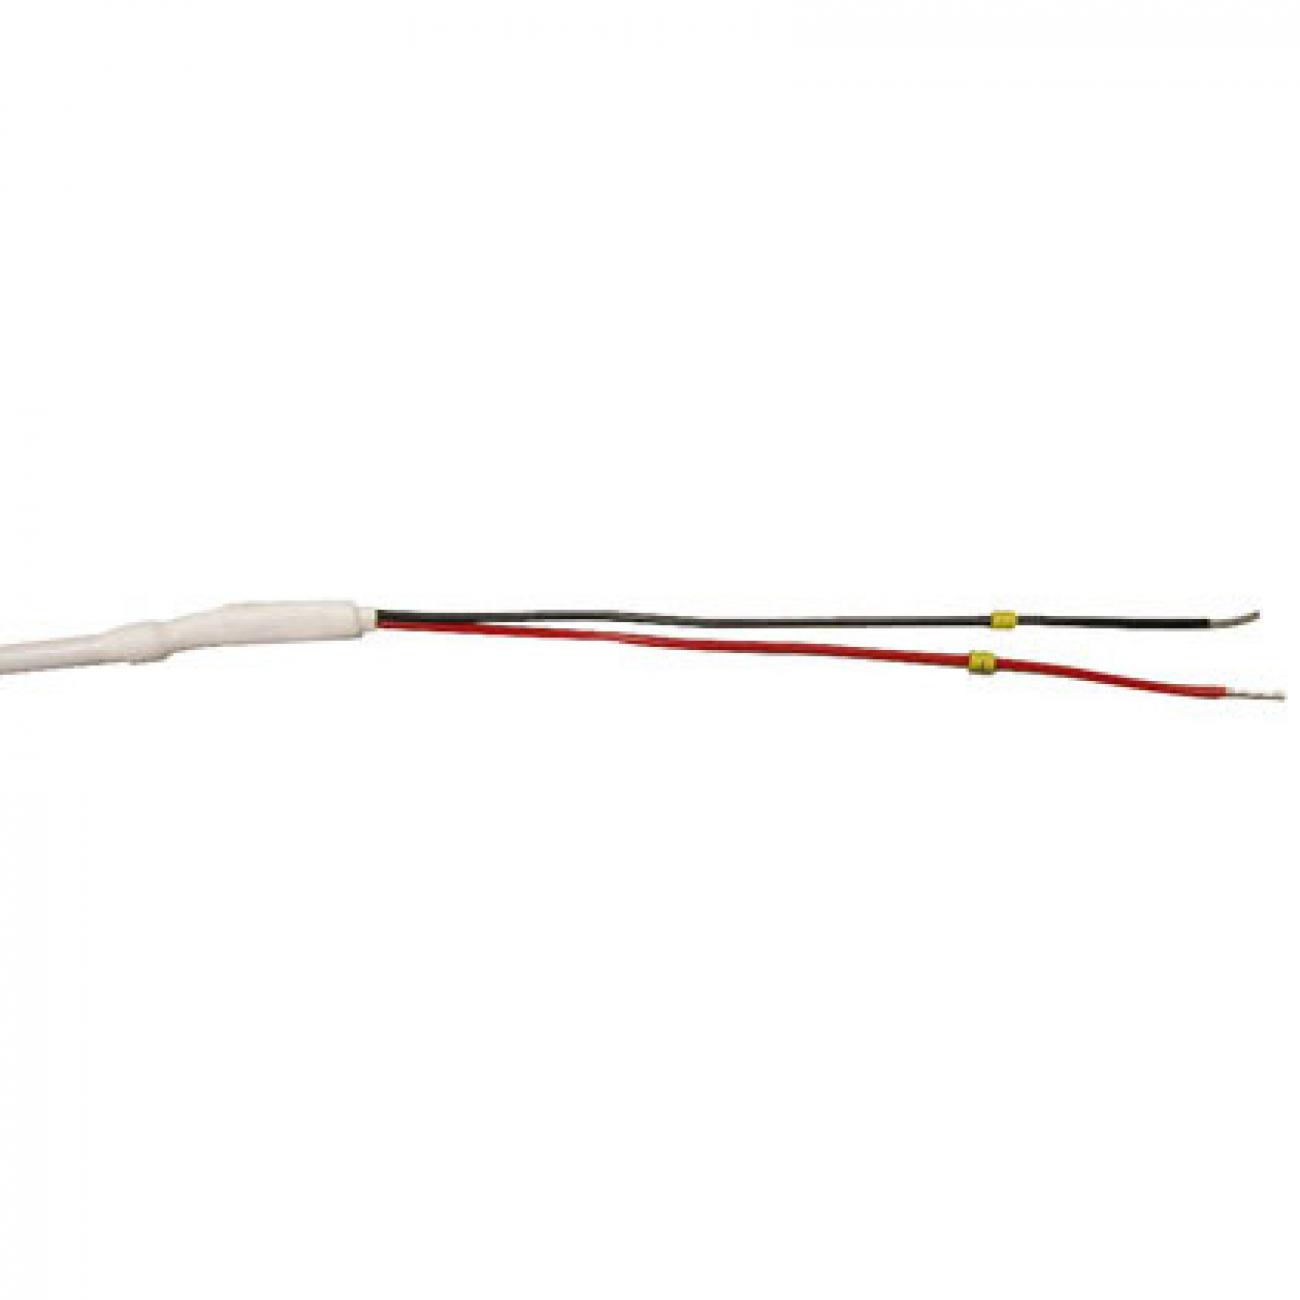 Current / voltage input cables